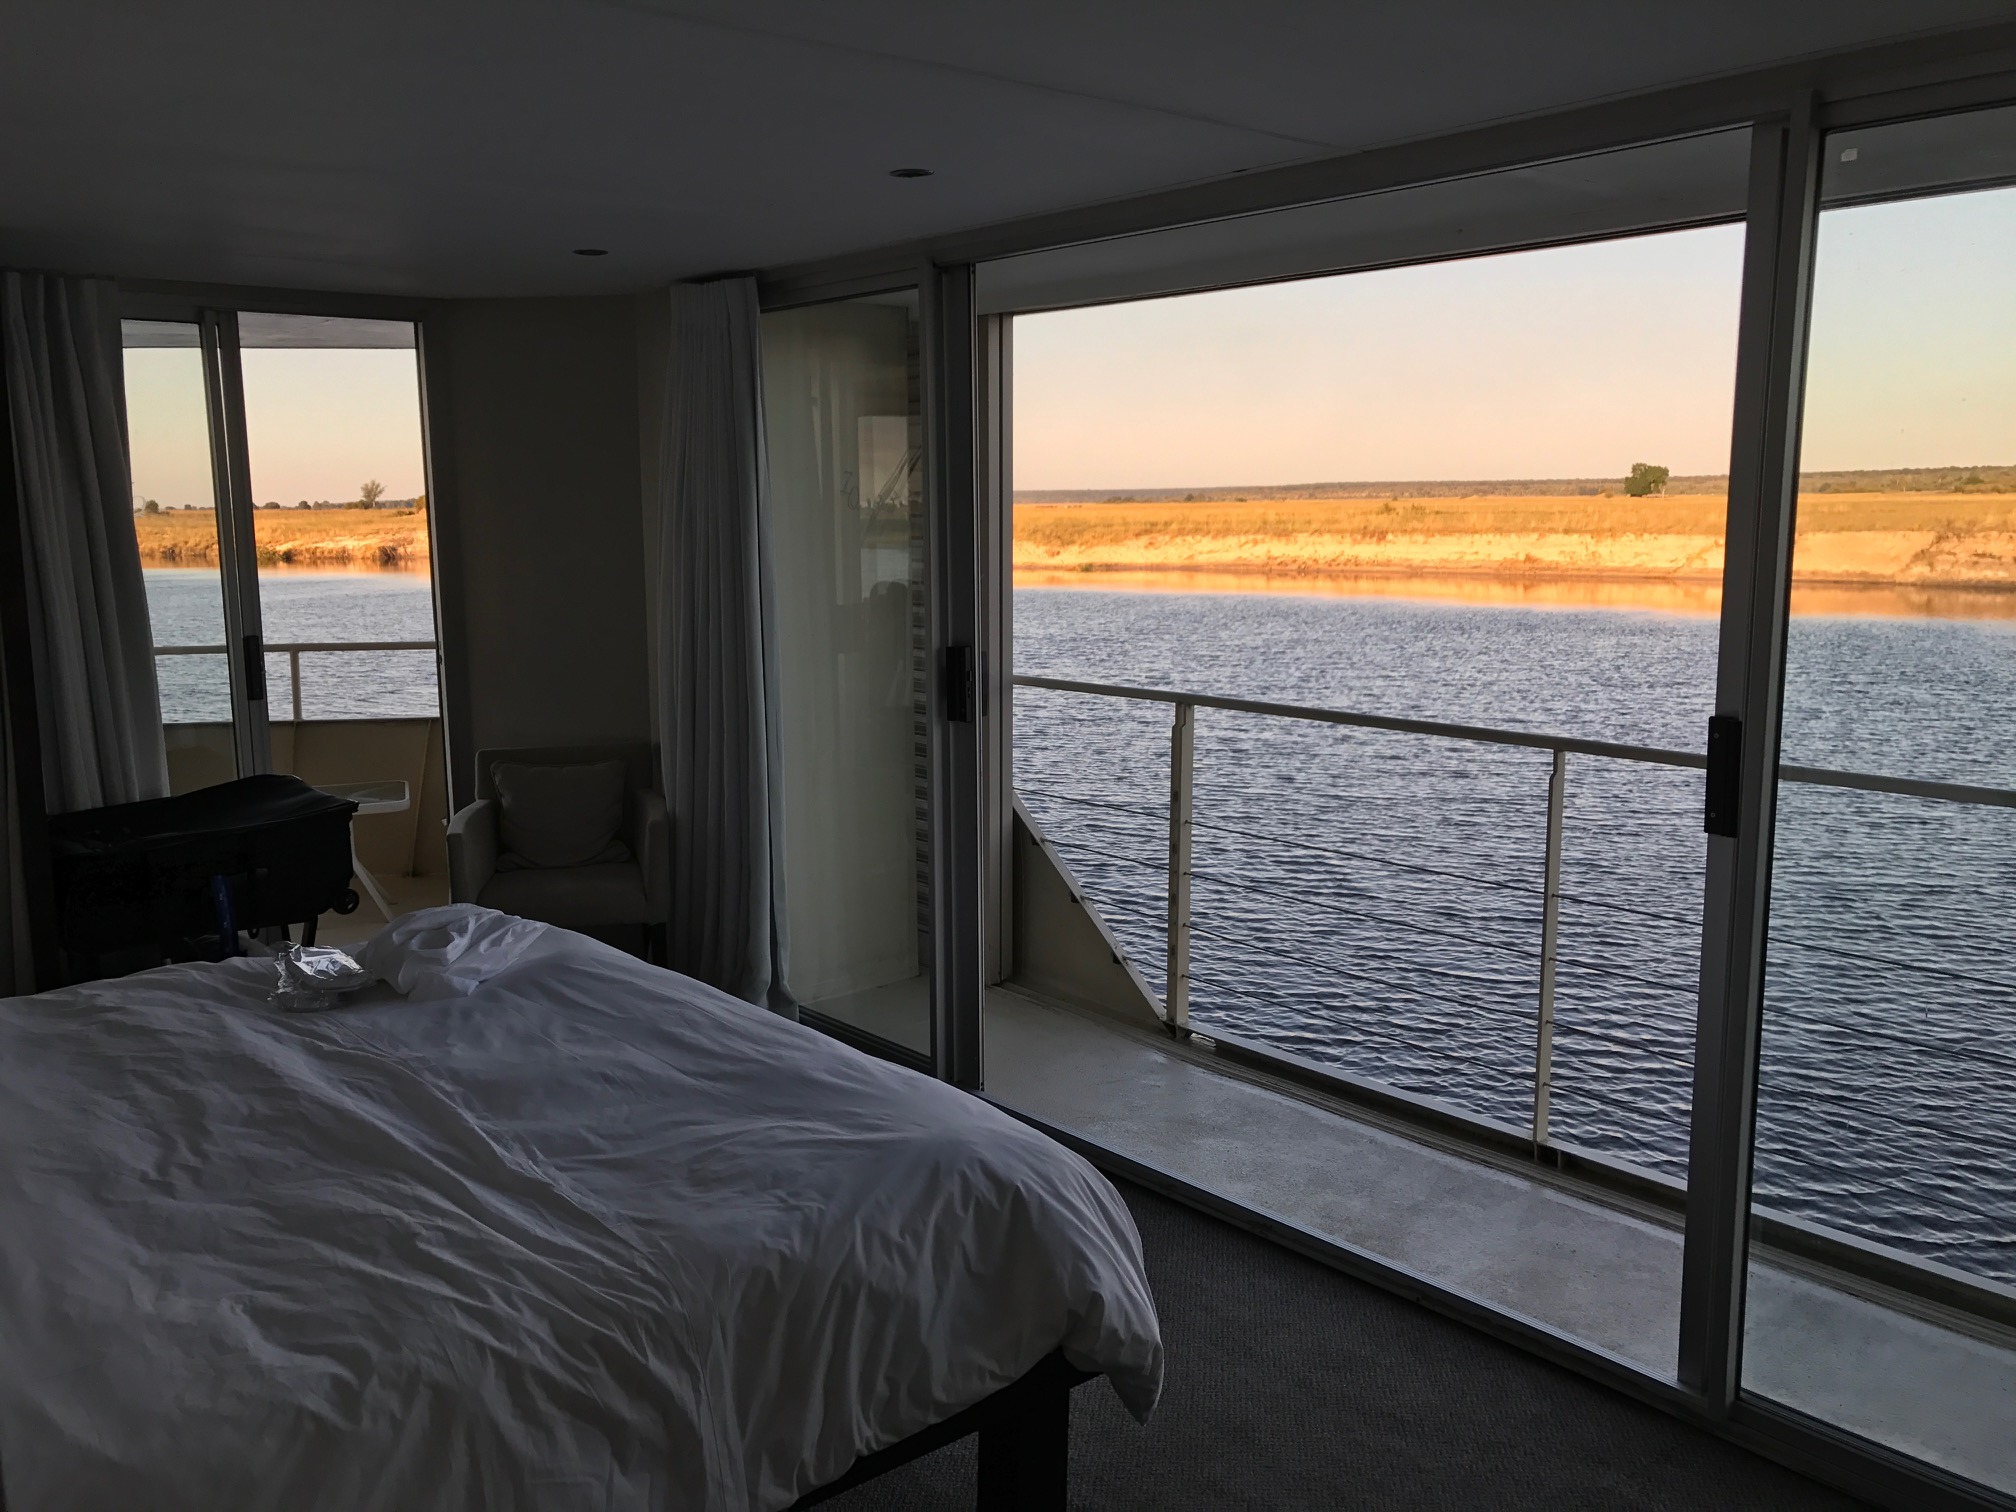 Zambezi Queen staterooms & suites